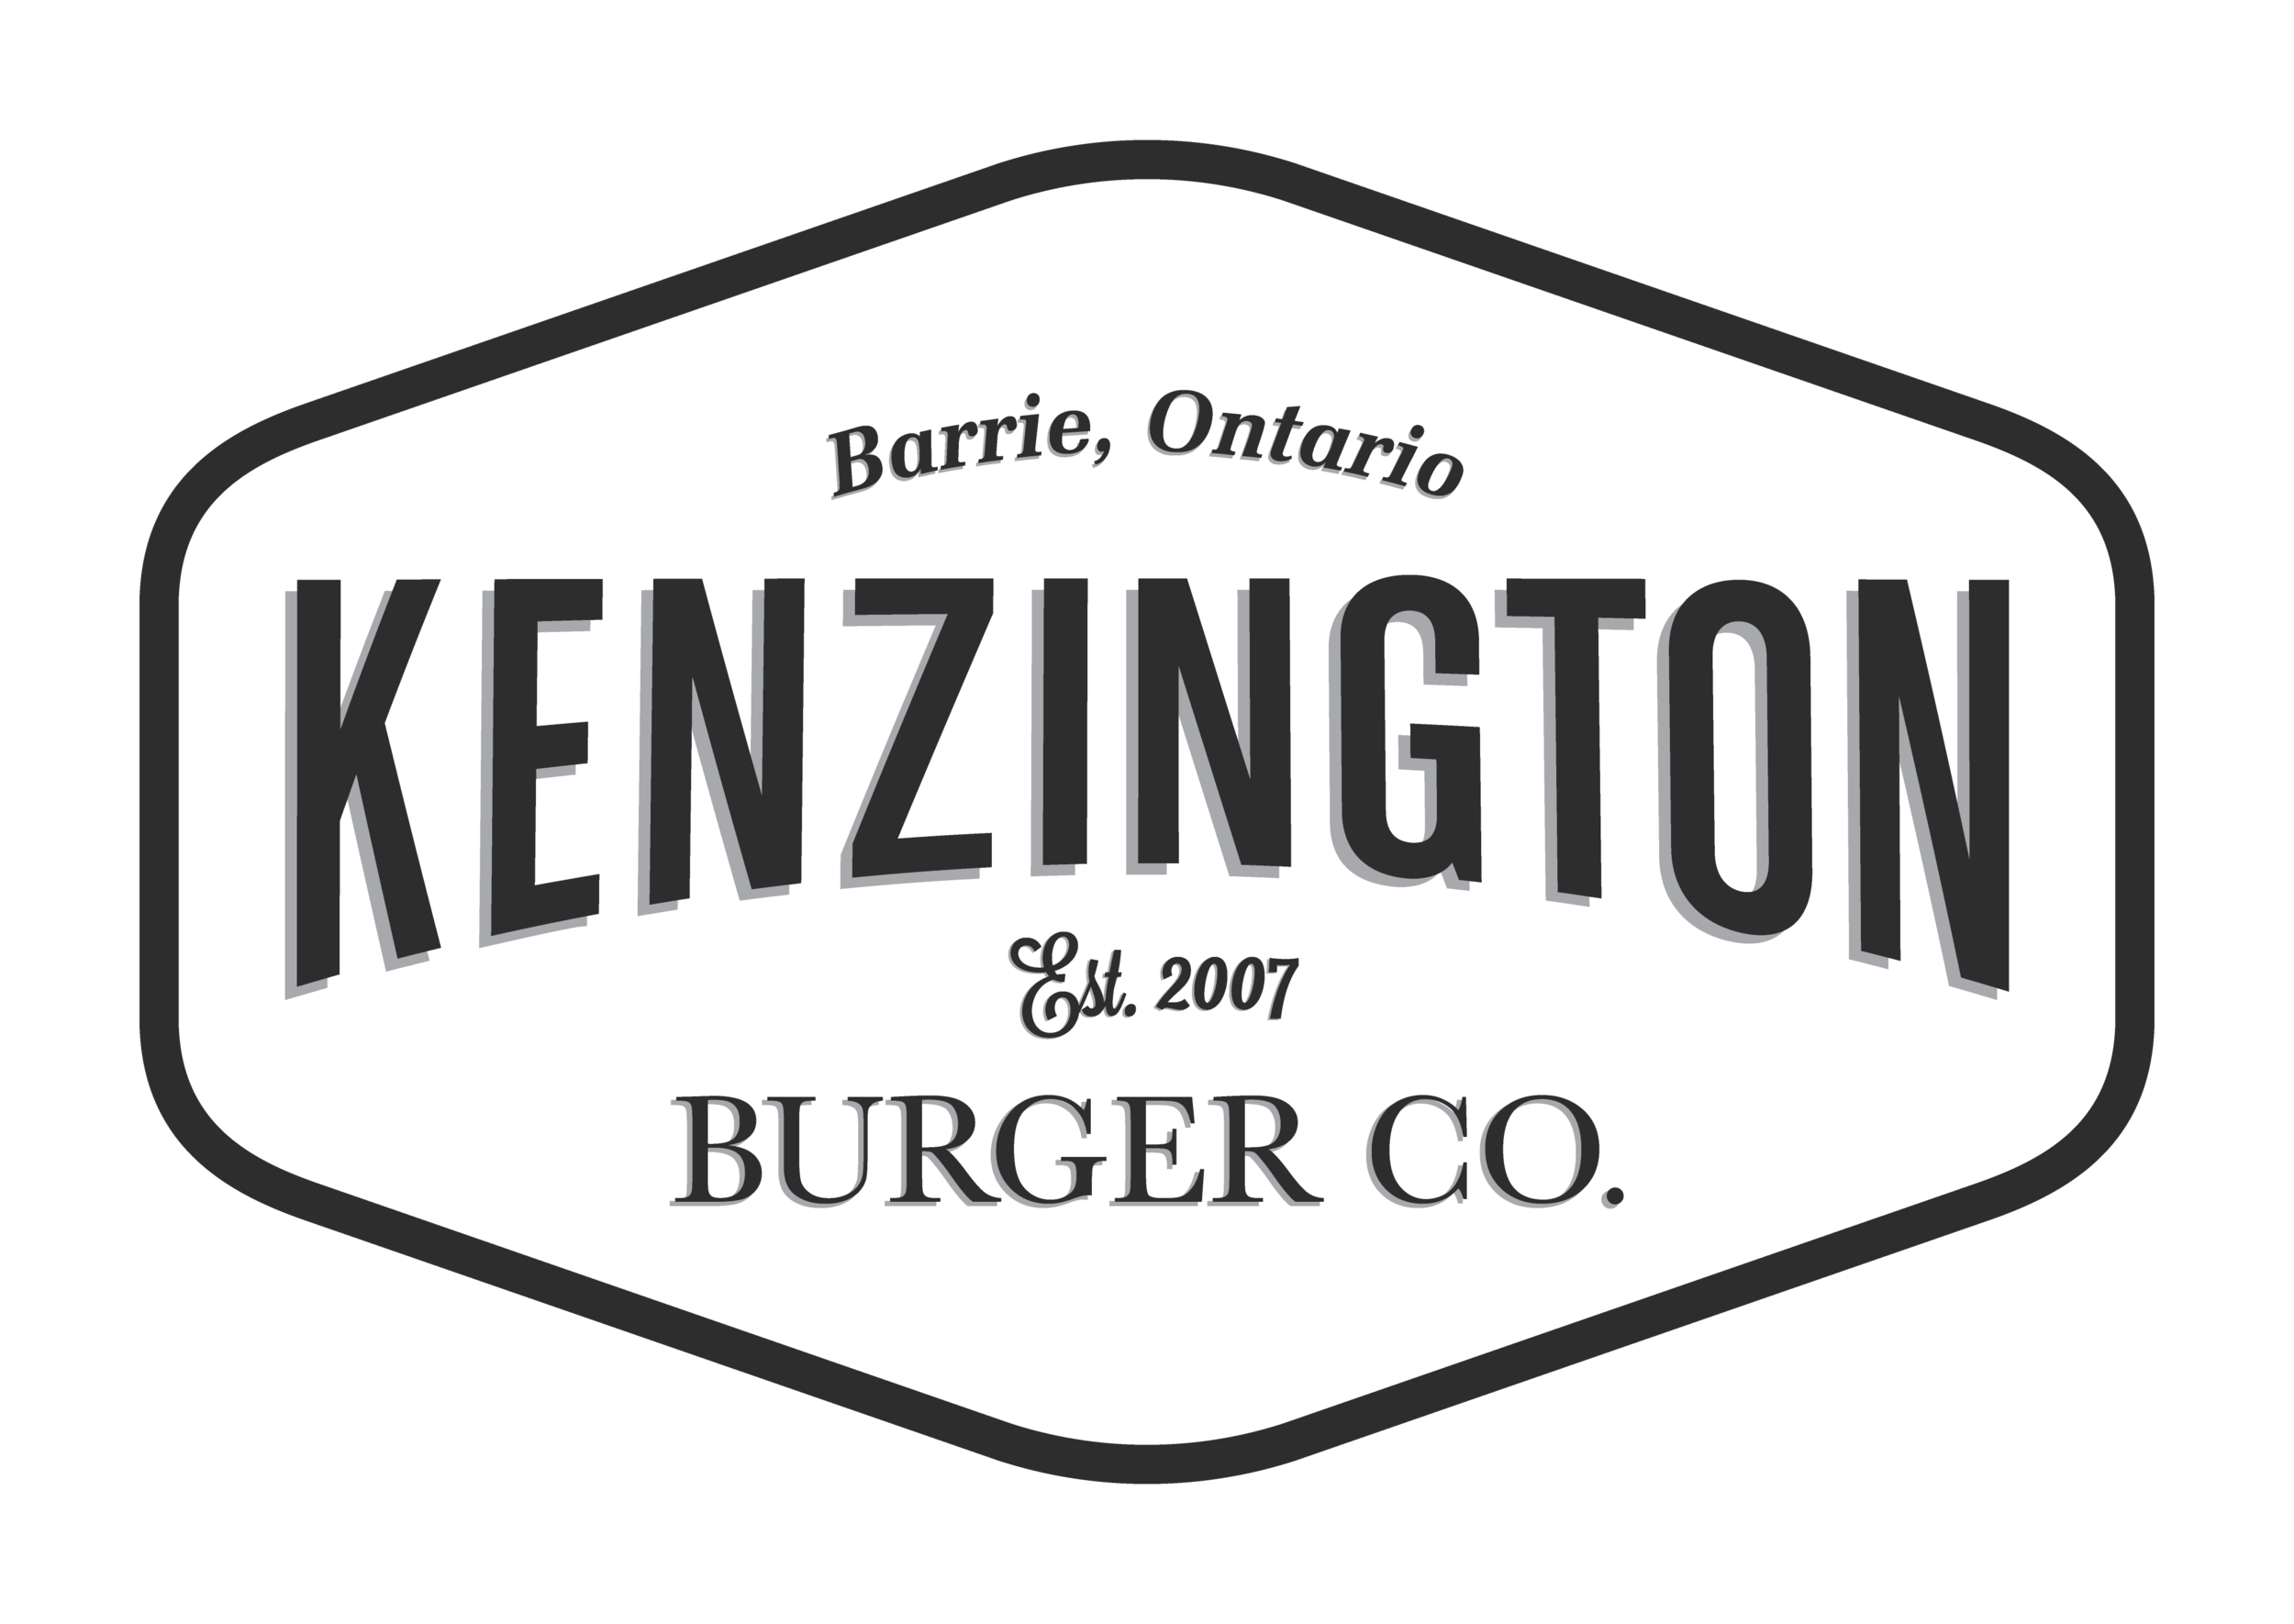 Kenzington_LG_Black_Master_BurgerCo.png